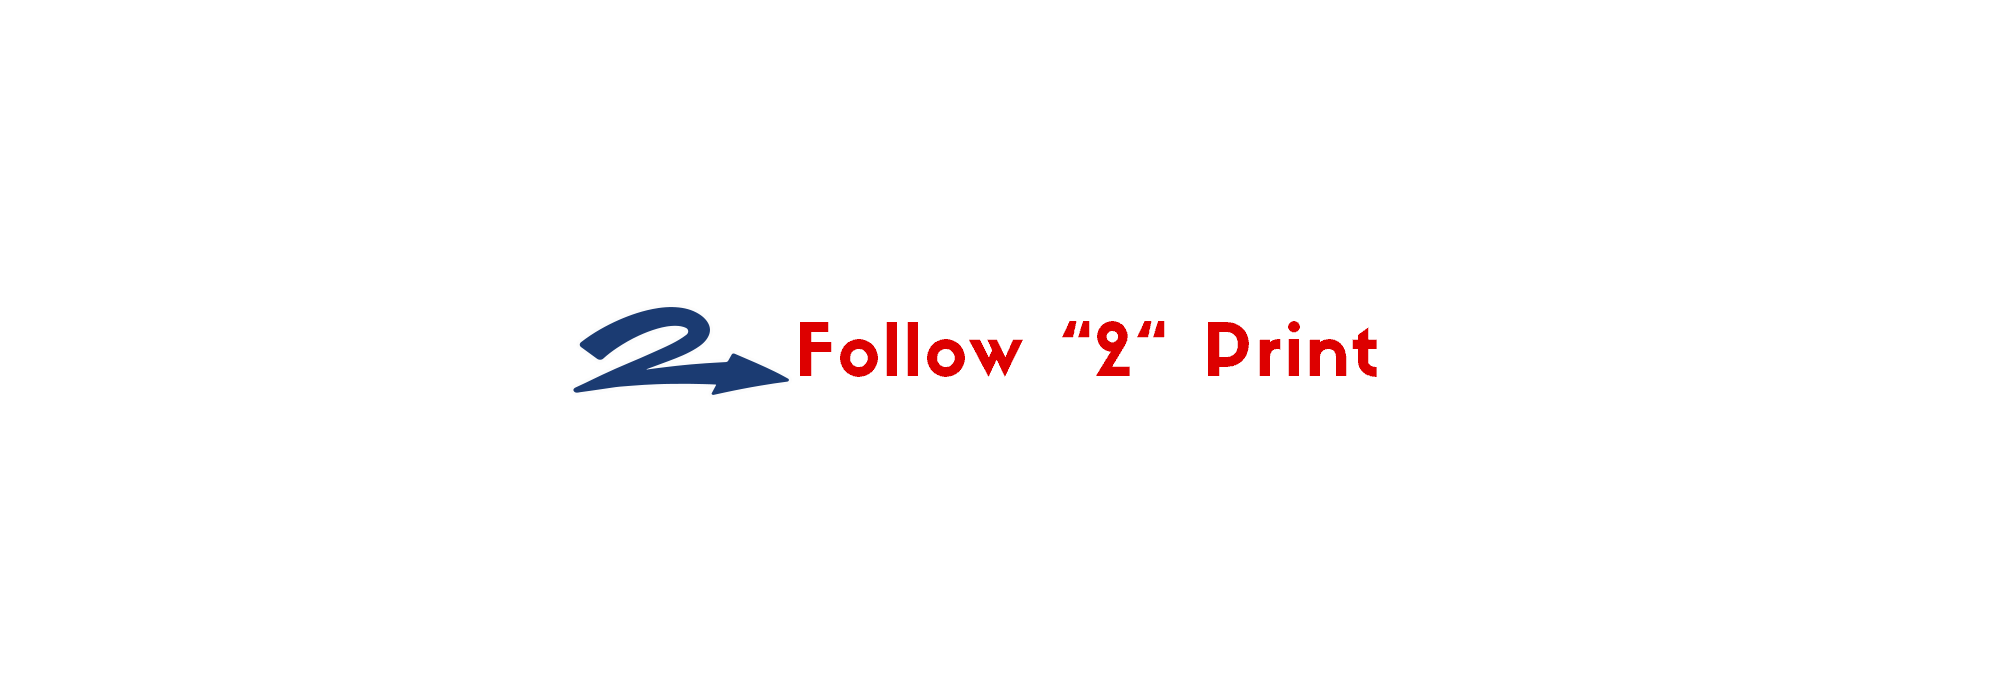 Follow'2'Print printing solution